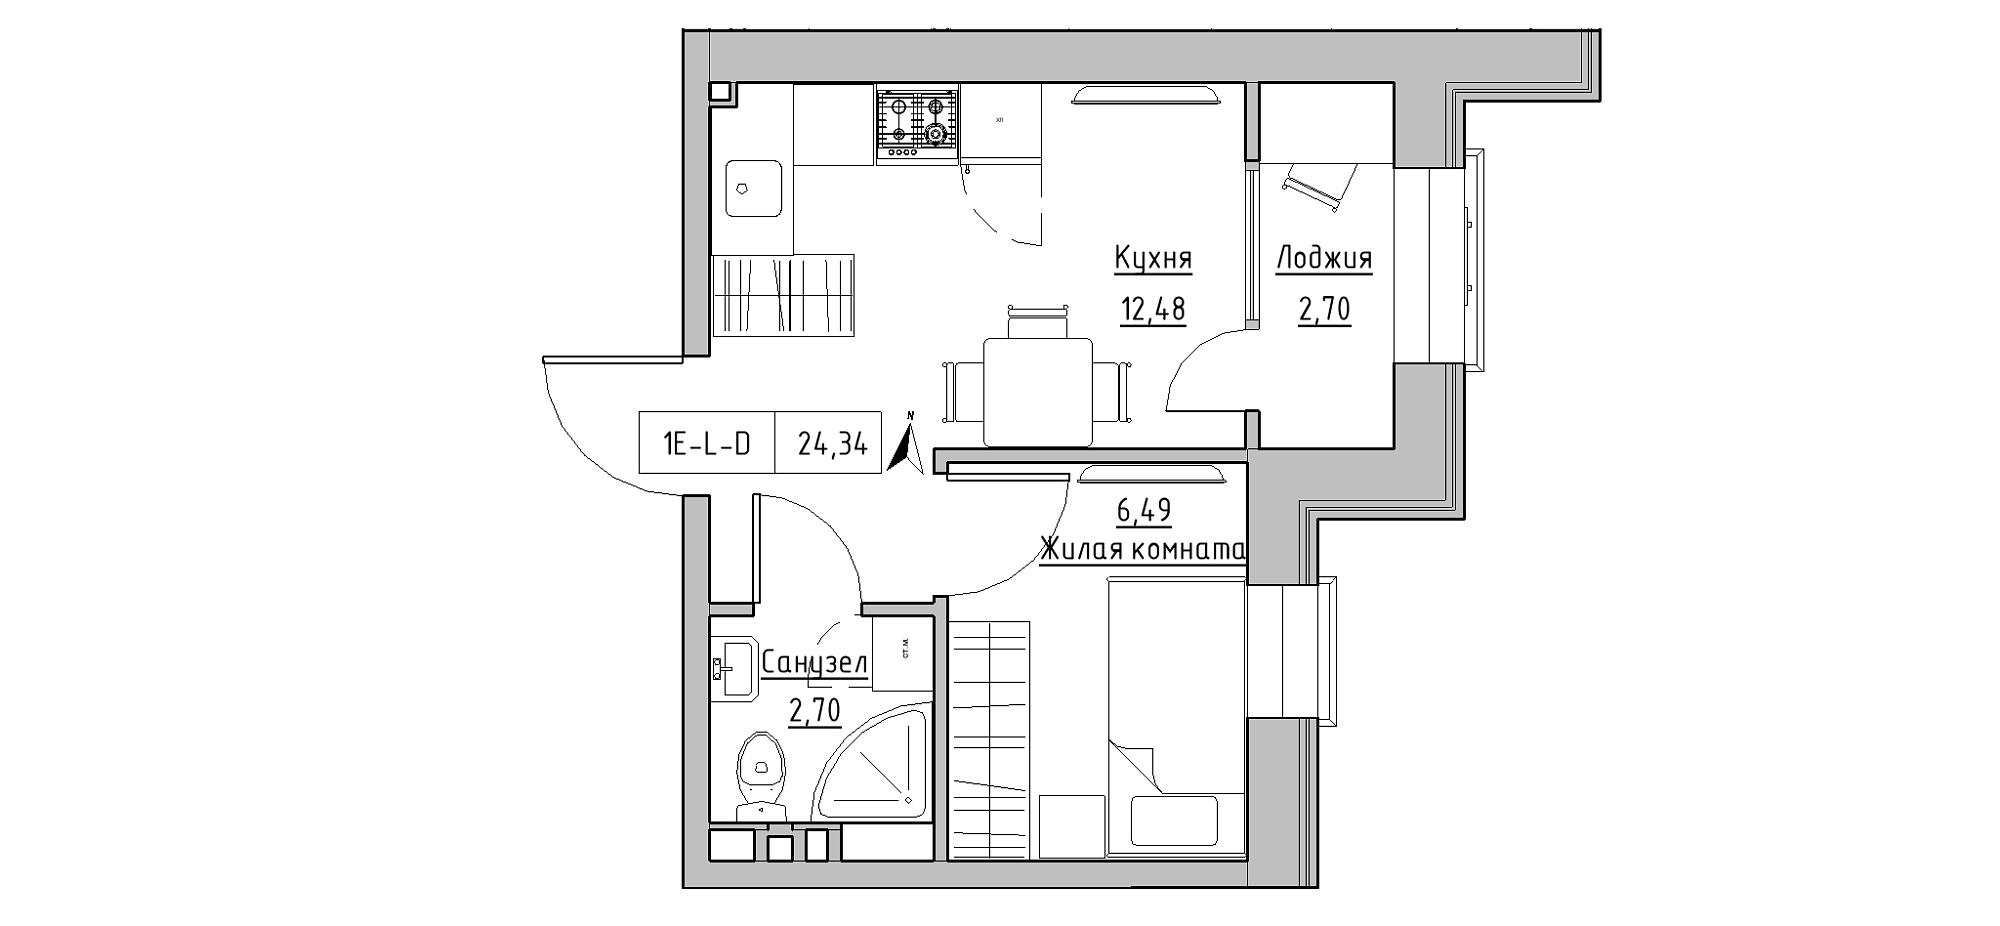 Planning 1-rm flats area 24.34m2, KS-020-02/0015.